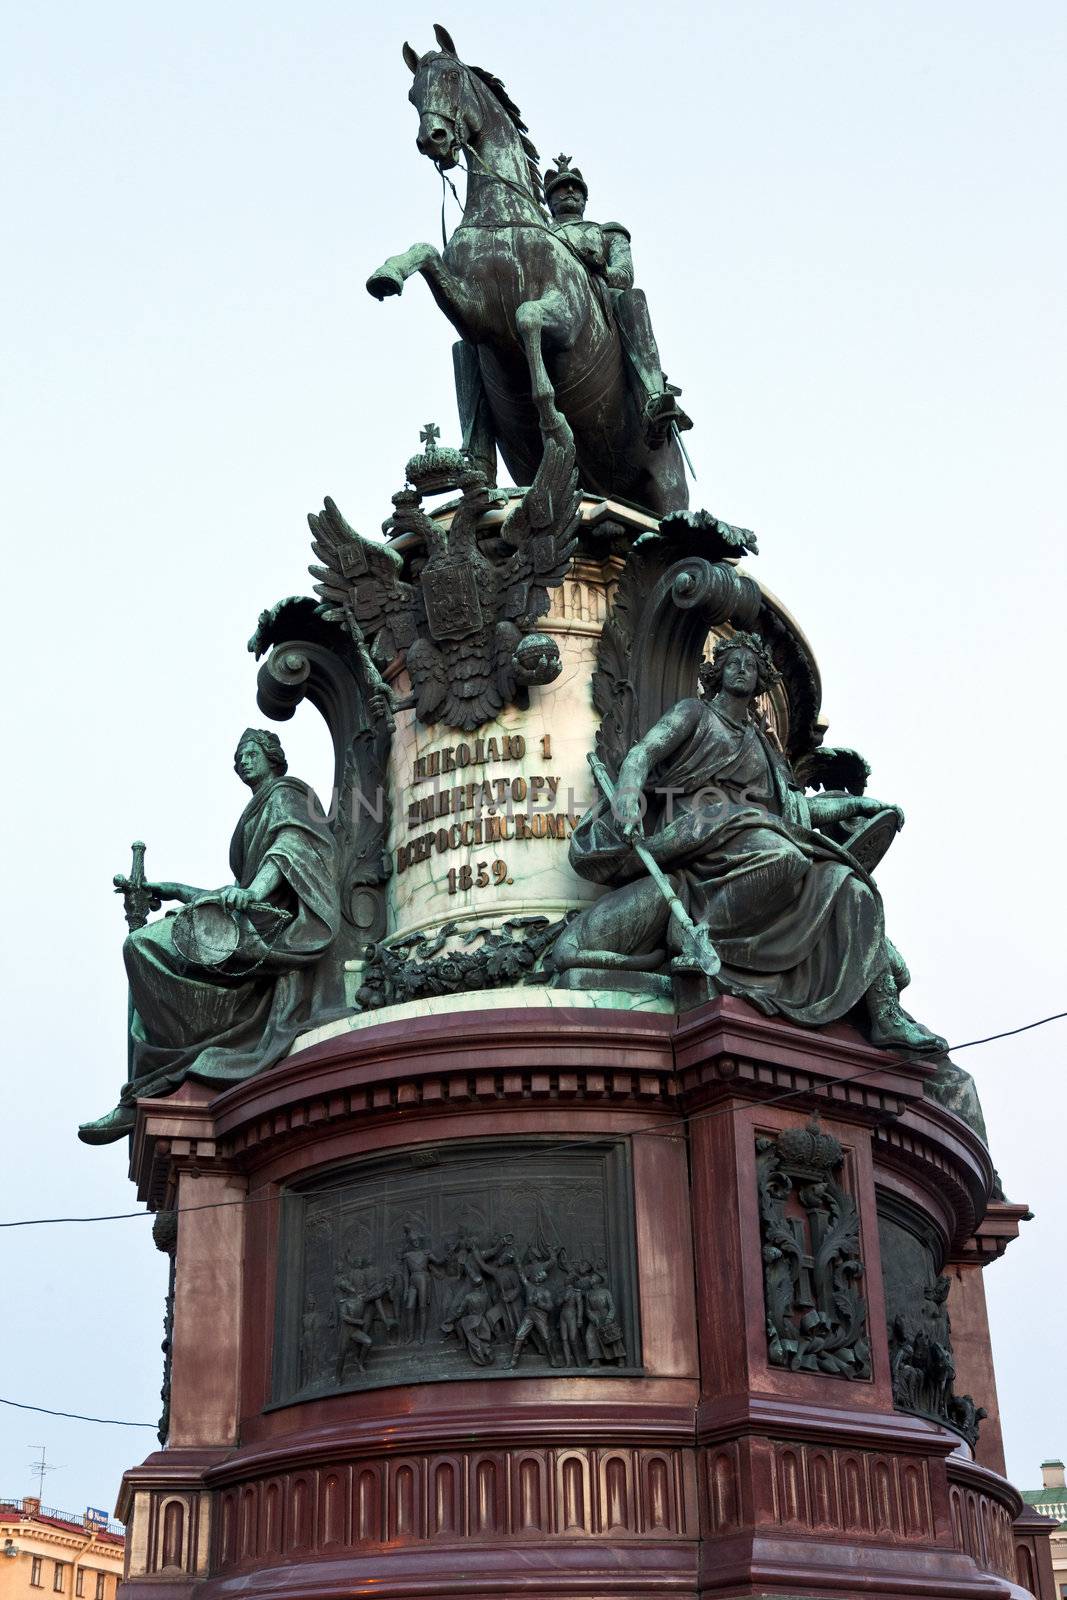 Nicholas I Statue/Monument (St Isaac's Square), St Petersburg.